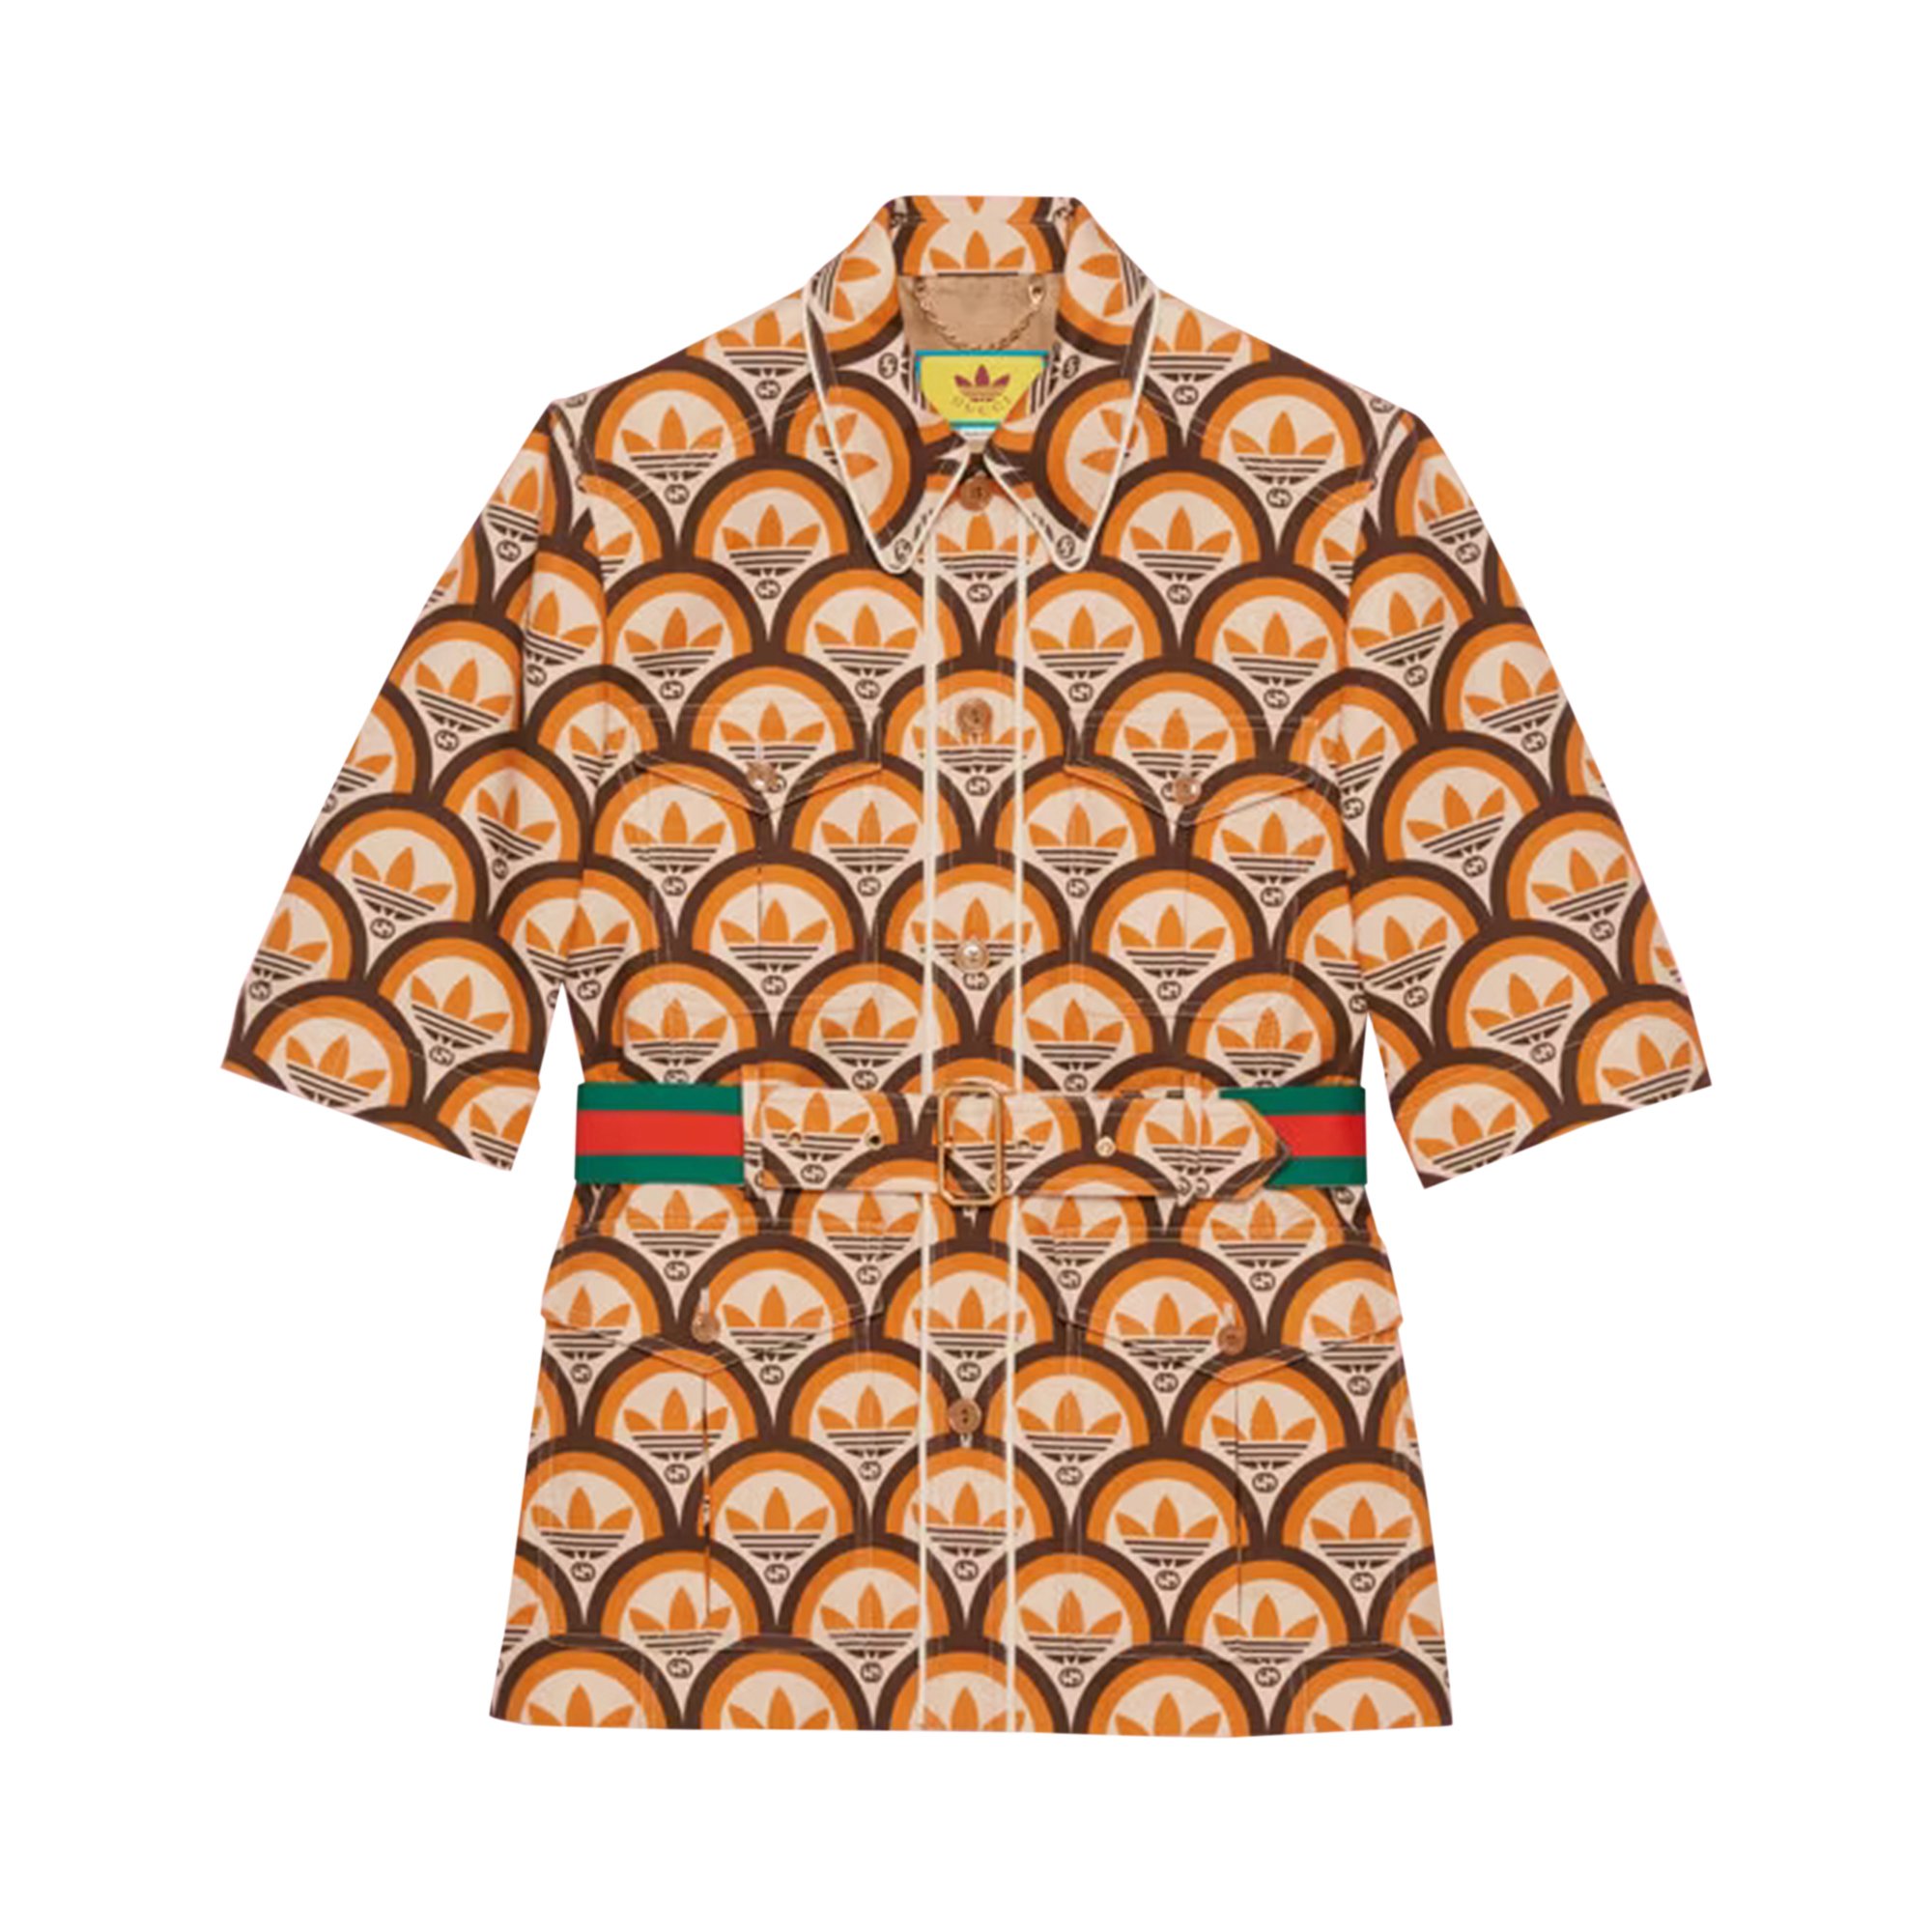 Gucci x adidas Trefoil Print Jacket Orange/Black